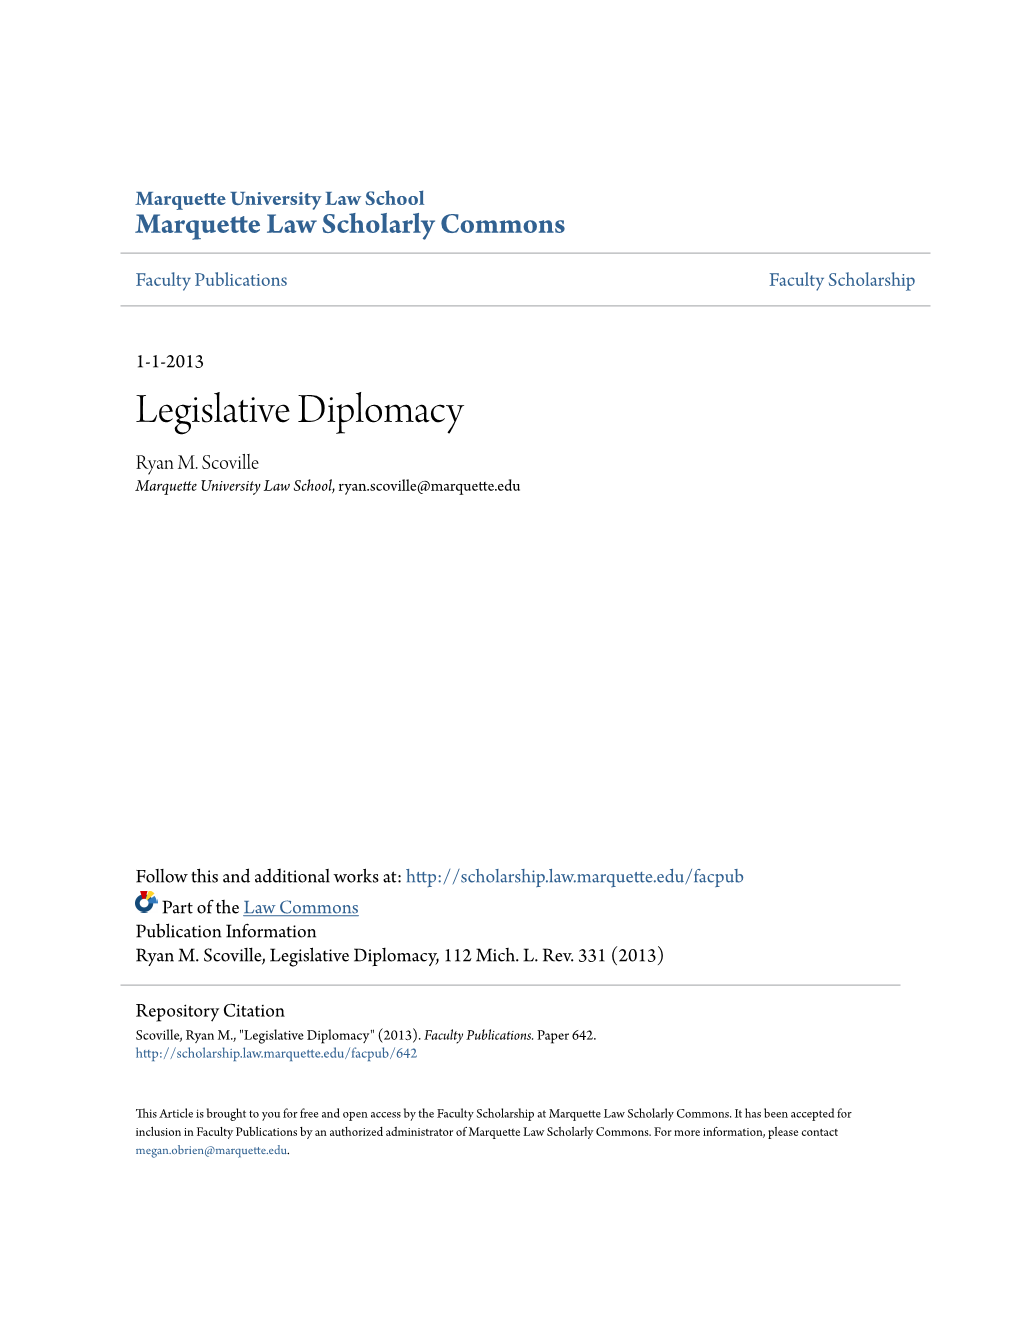 Legislative Diplomacy Ryan M